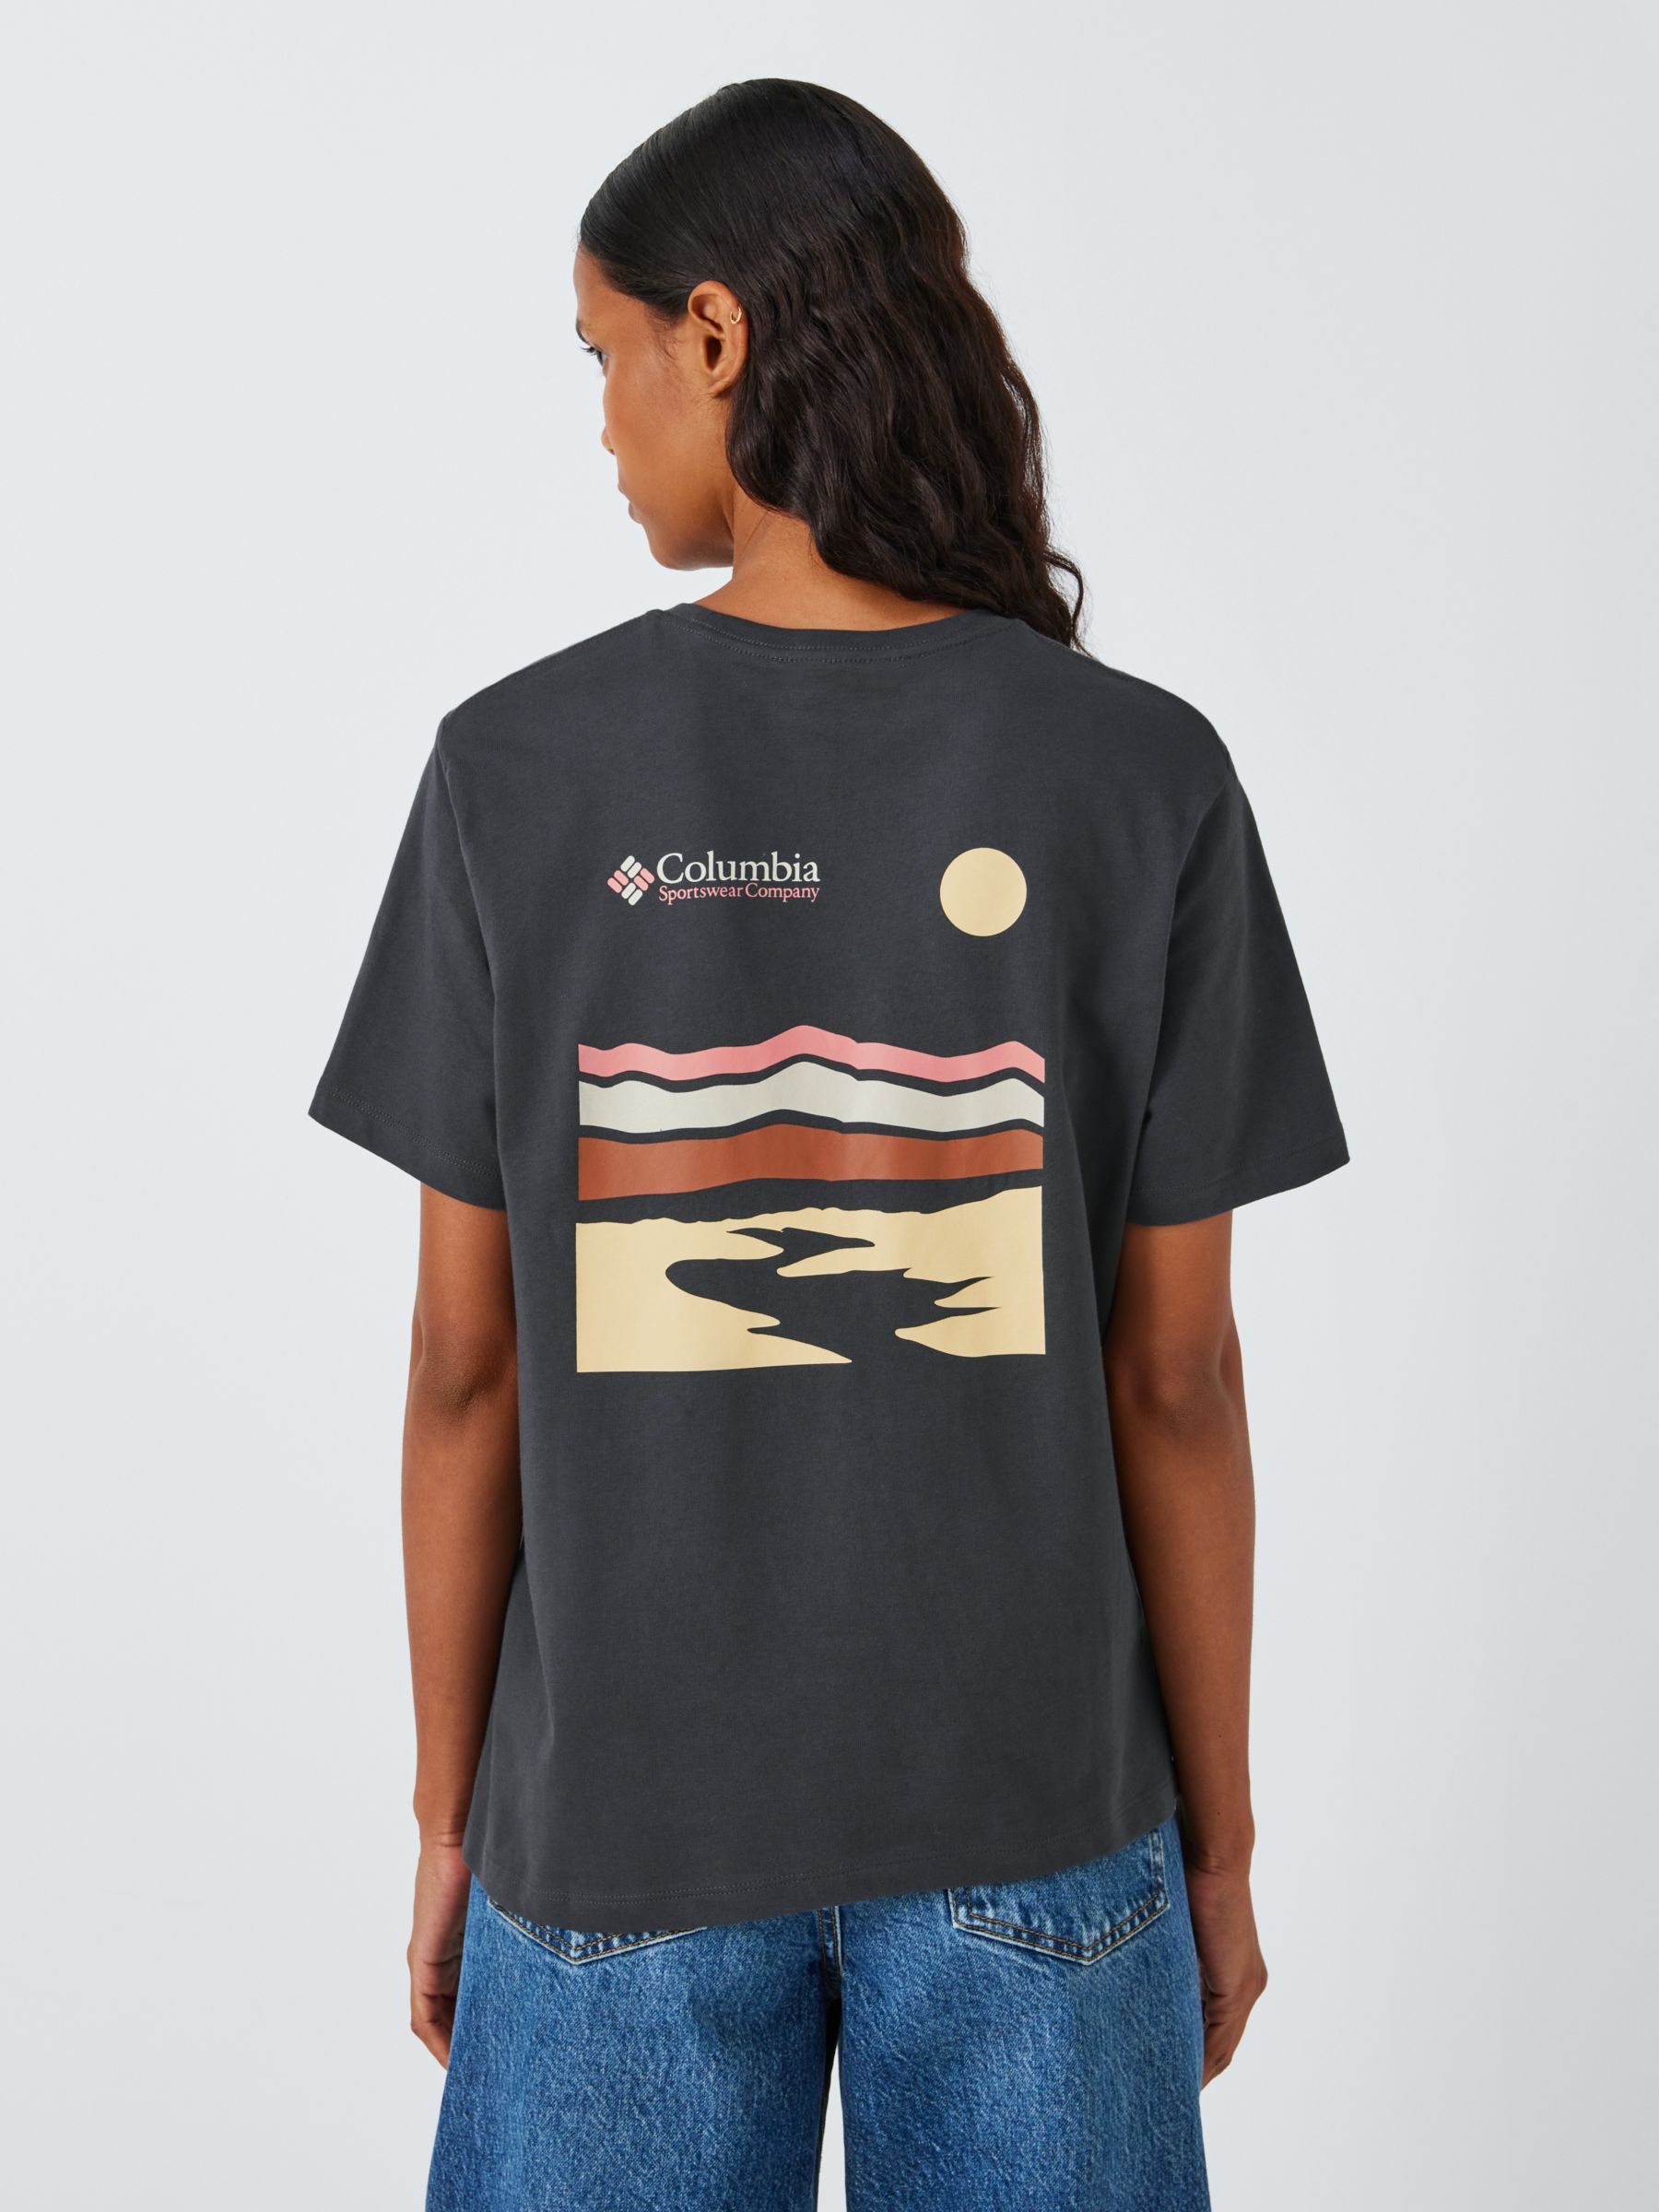 Columbia Women's Boundless Beauty T-shirt, Shark Heritage, S